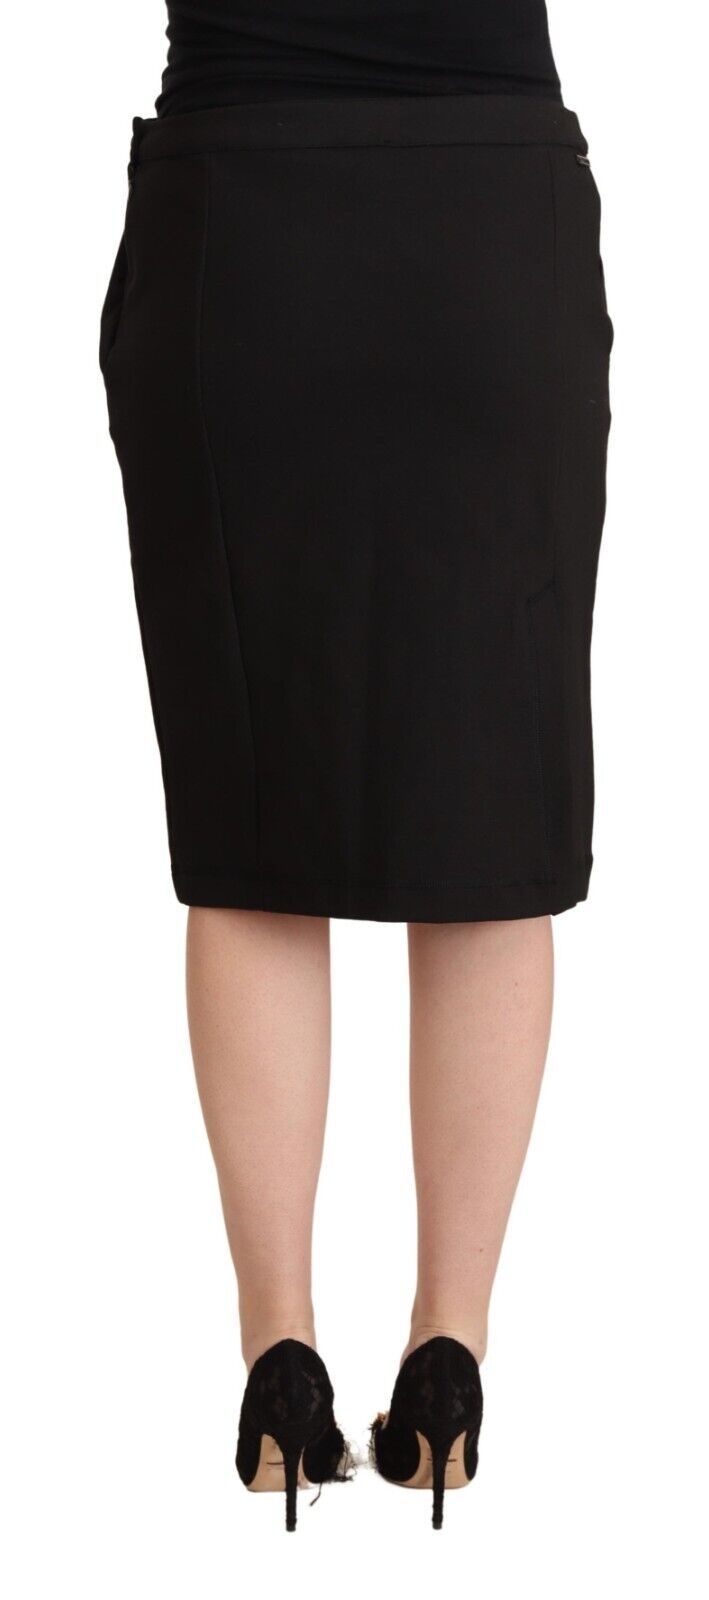 GF Ferre Chic Black Pencil Skirt Knee Women's Length